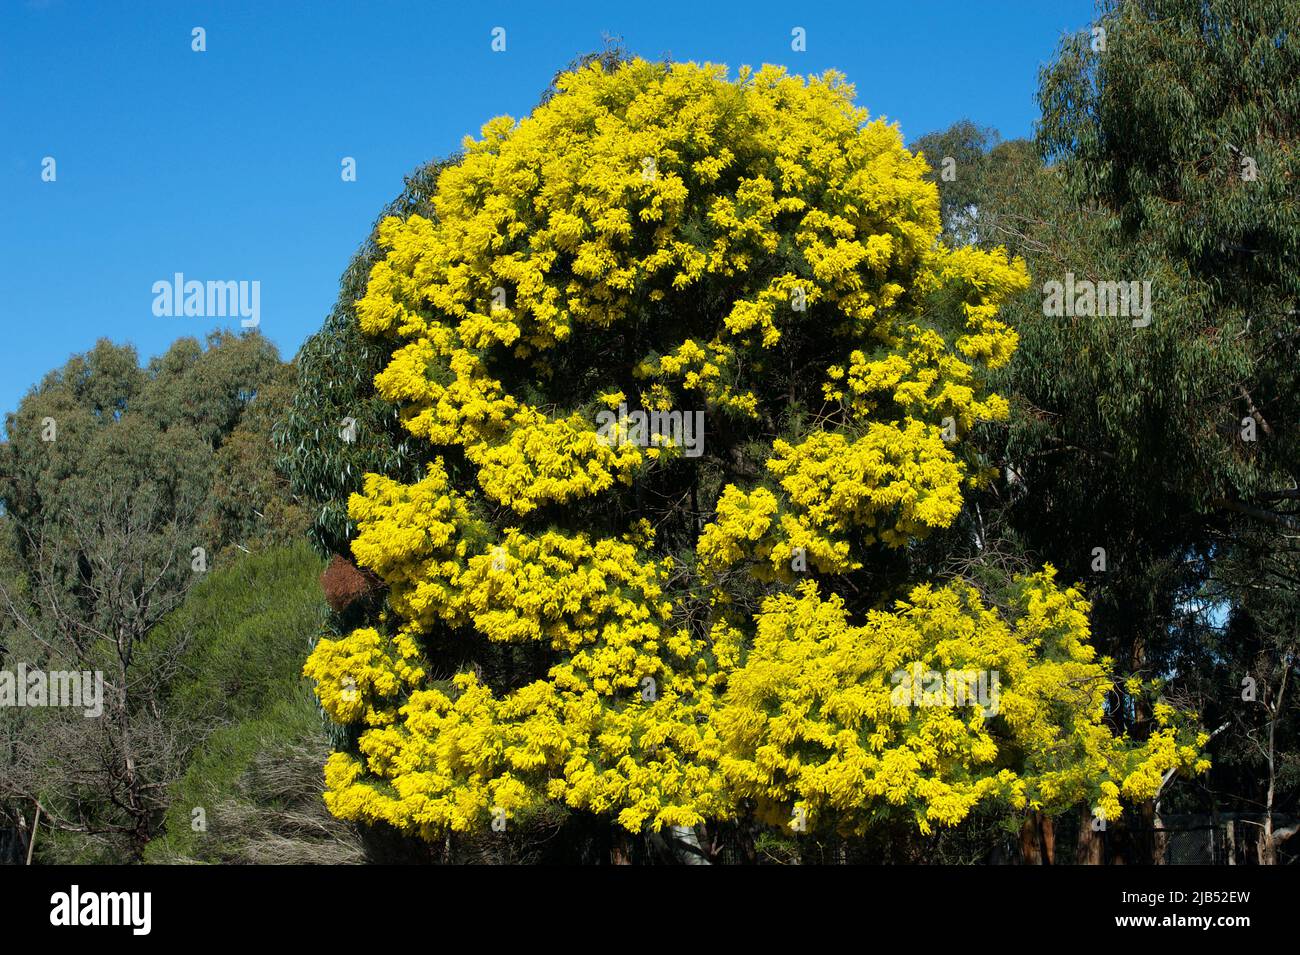 A Silver Wattle tree (Acacia Dealbata) in full bloom, heralds the start of Spring at Jells Park in Glen Waverley, Victoria, Australia. Stock Photo